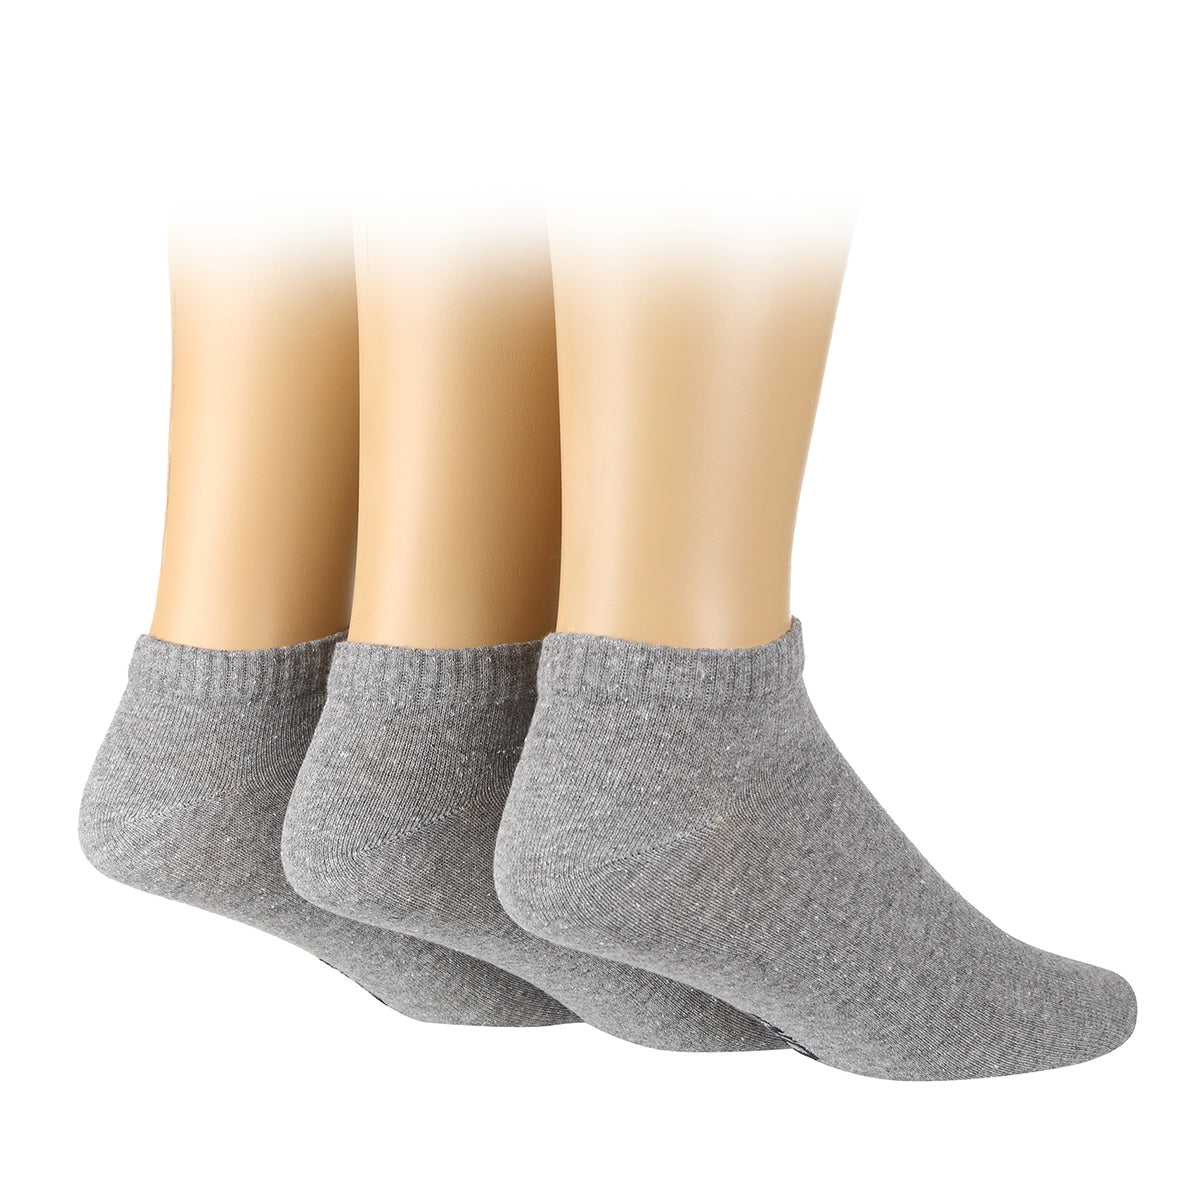 Men's Plain Trainer Sports Socks - 3 Pairs